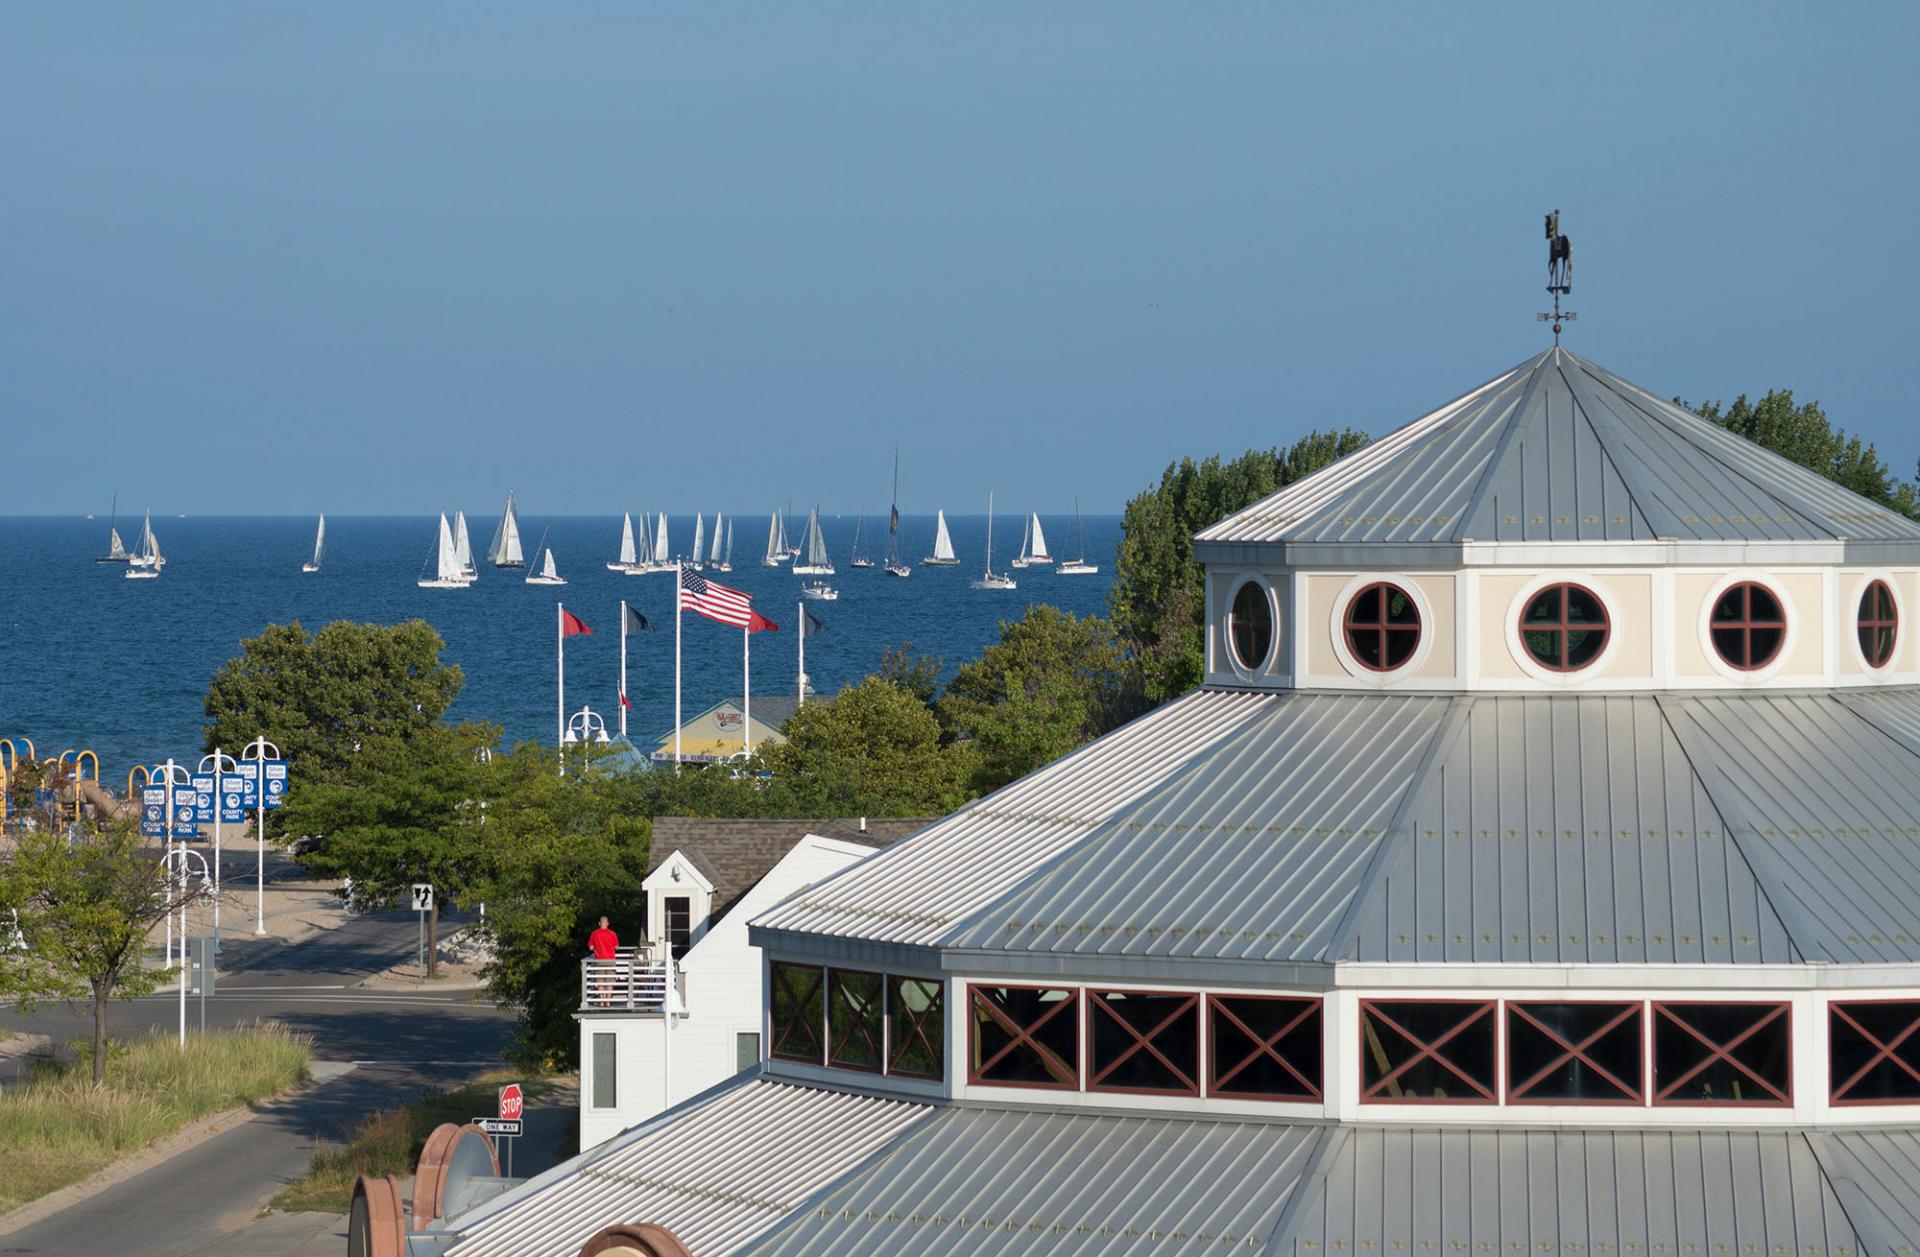 A group of sail boats out on Lake Michigan